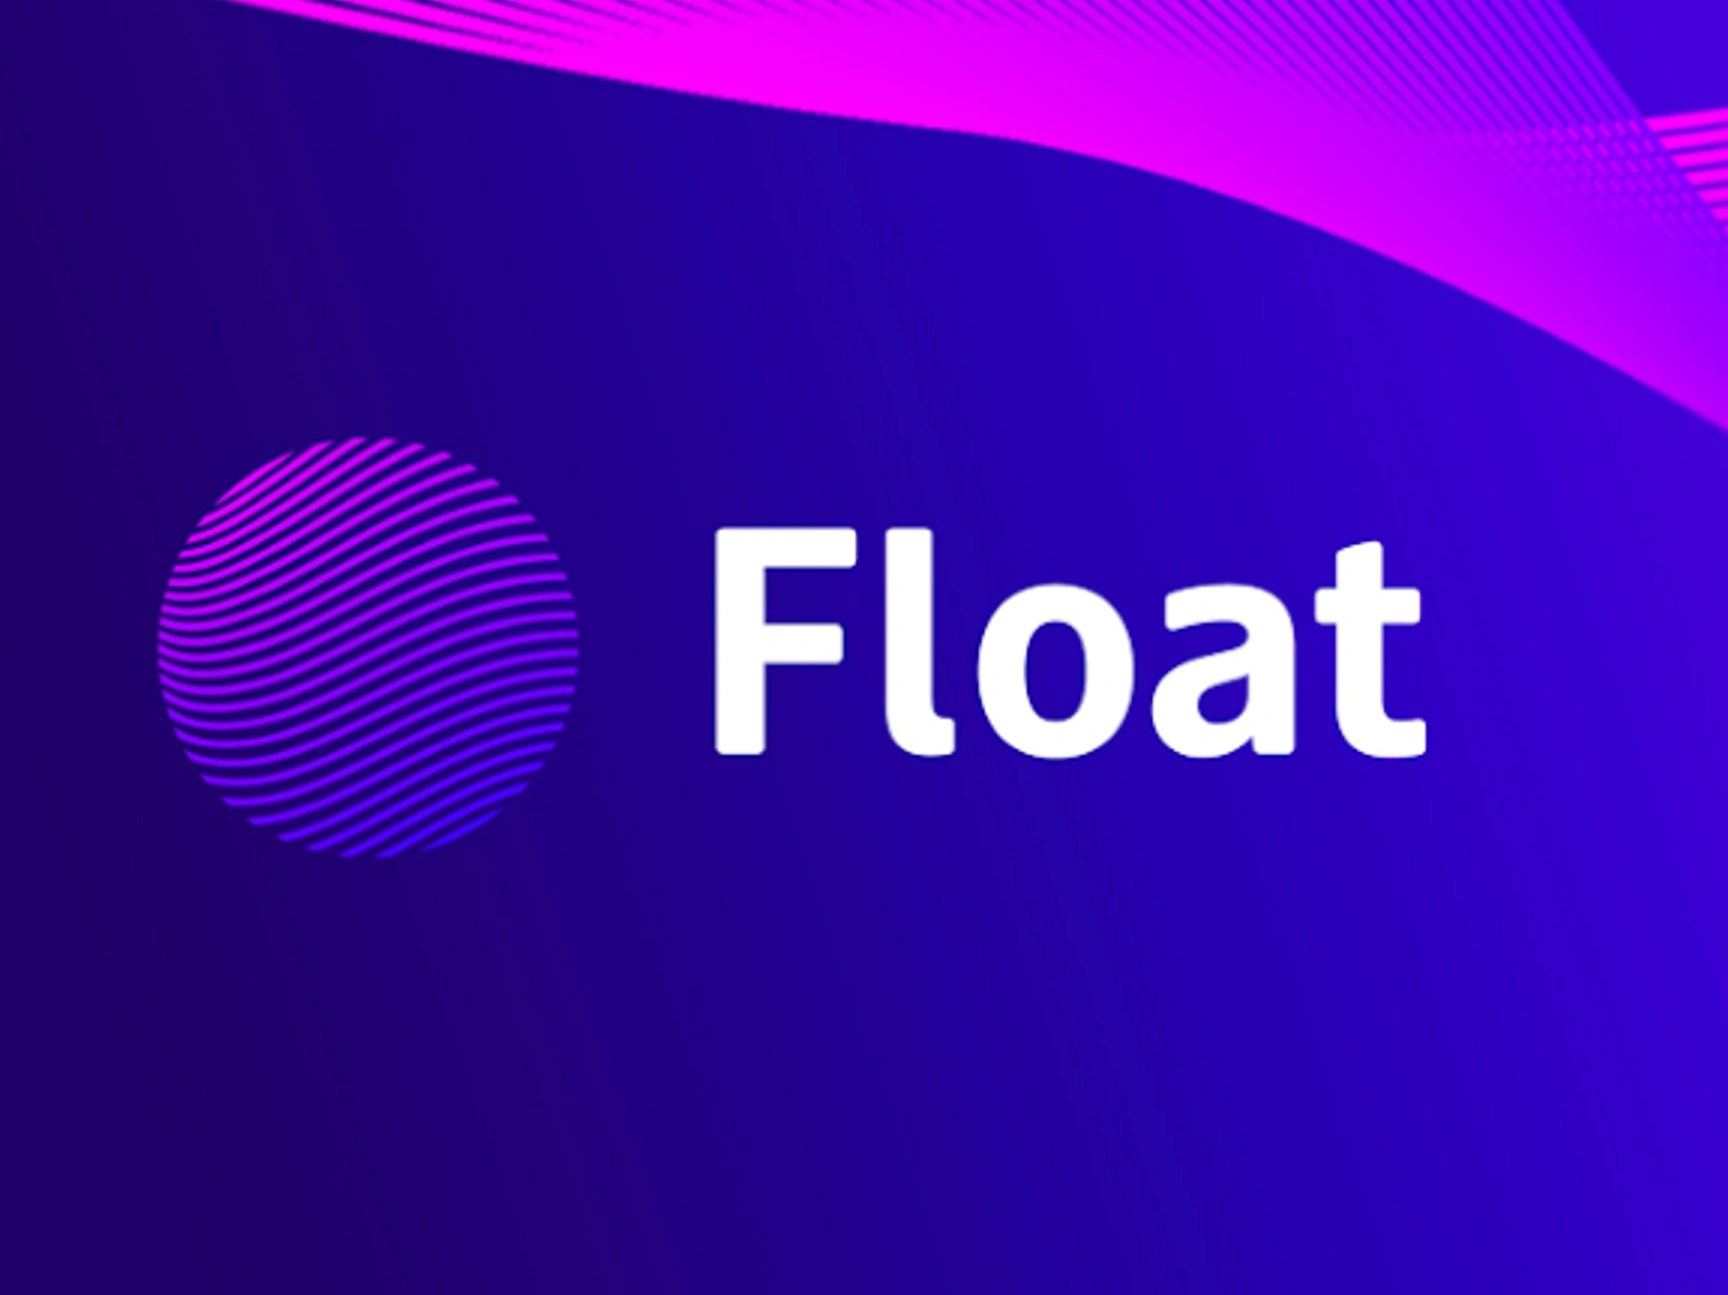 Float Protocol